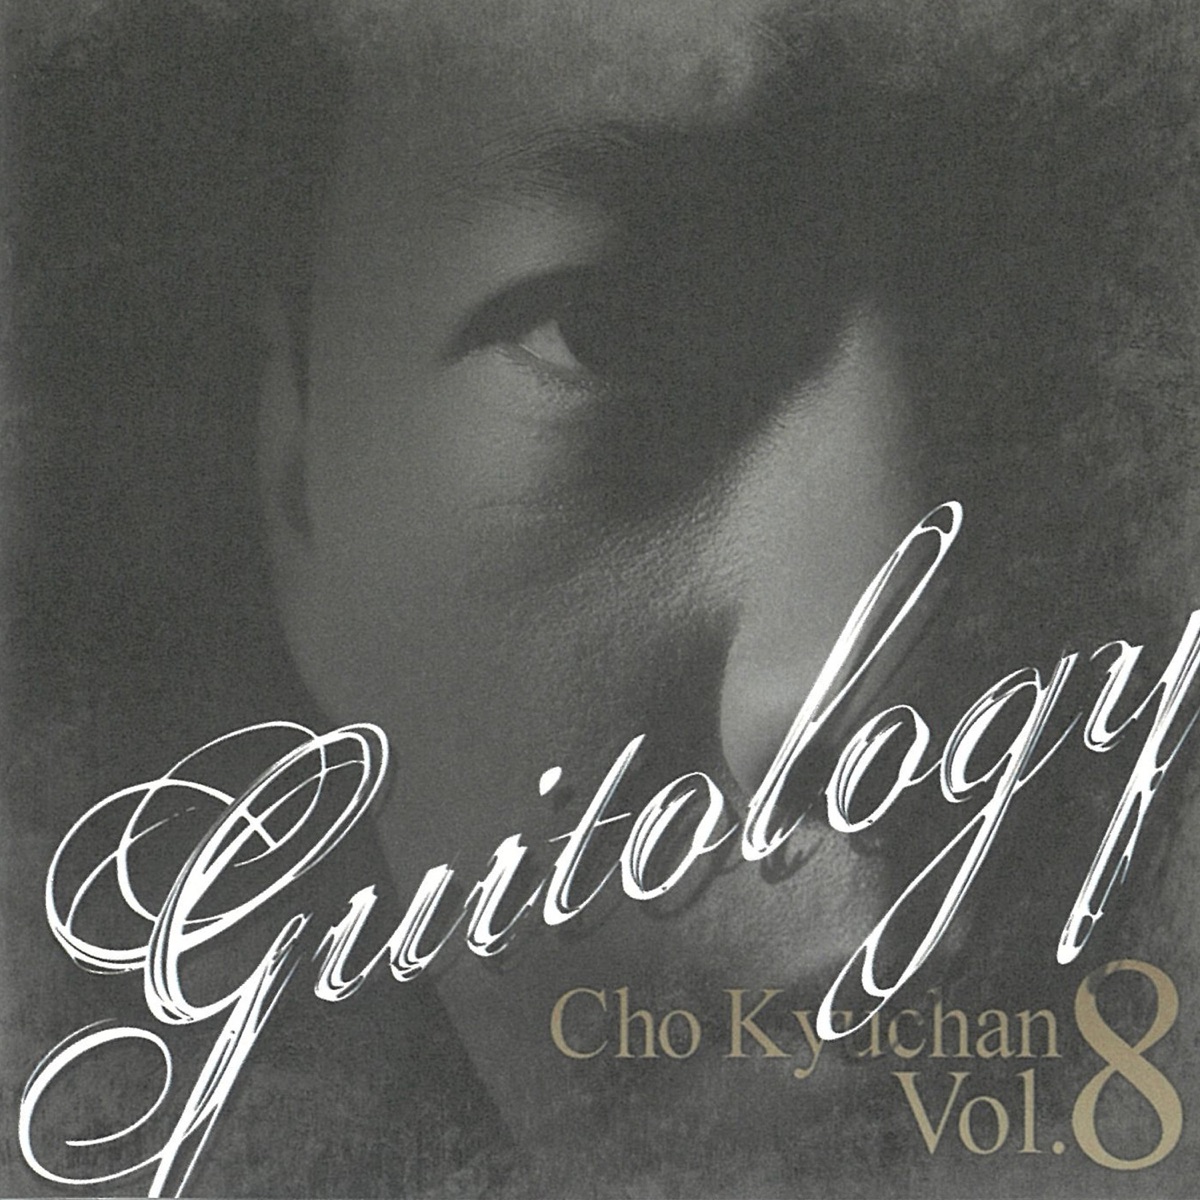 Cho Kyu Chan – Guitology